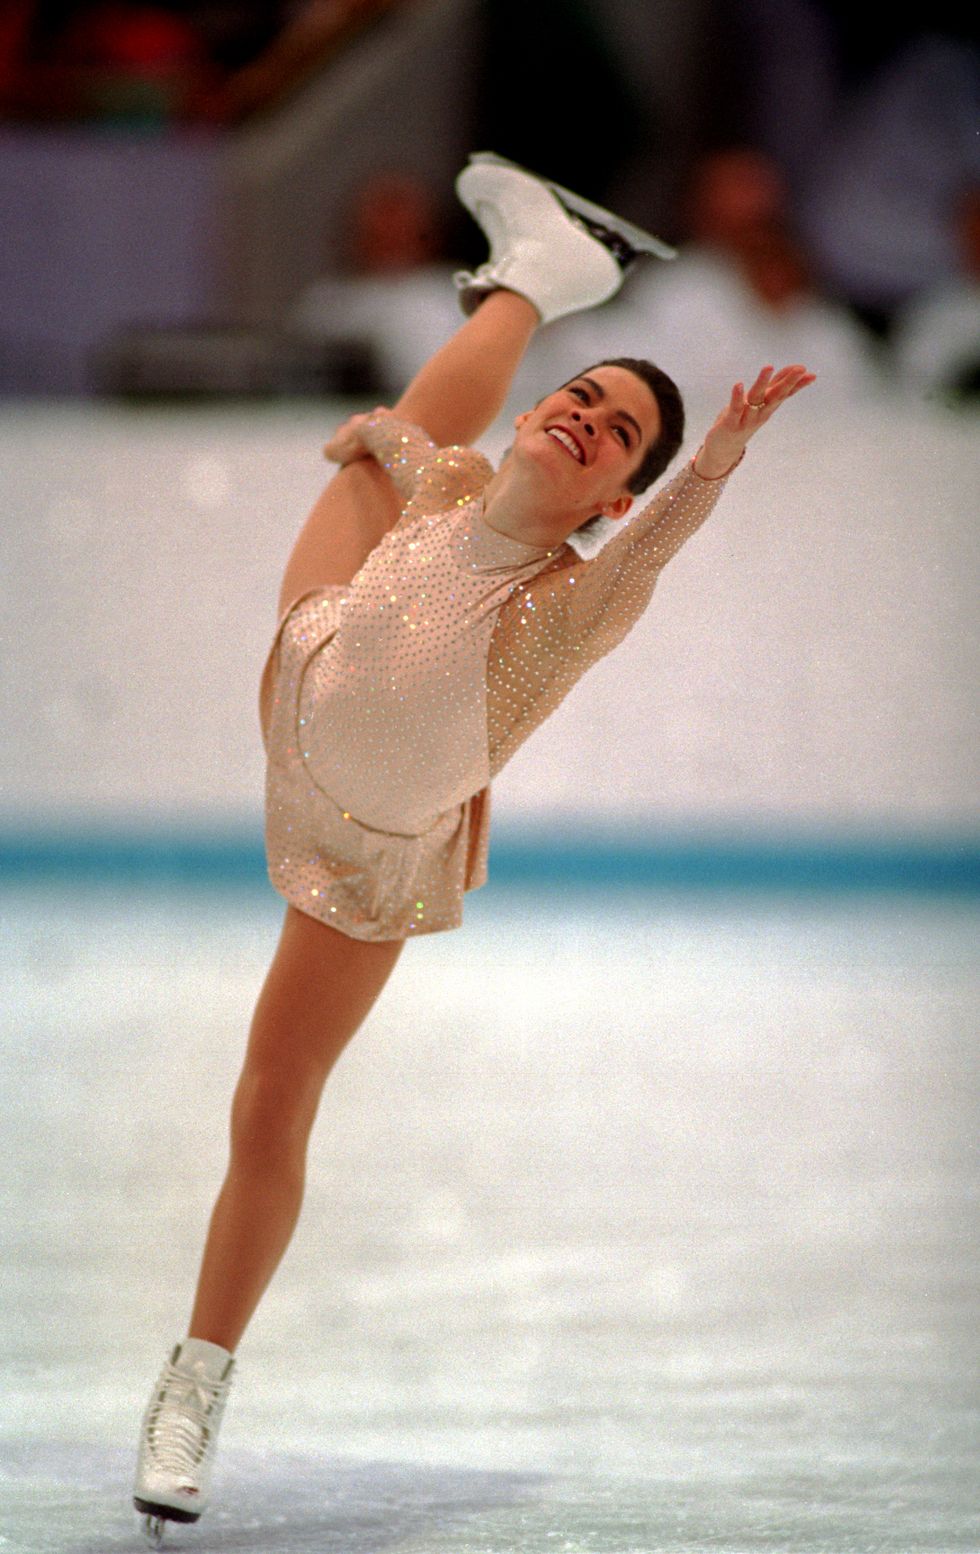 Figure skate, Ice skating, Figure skating, Skating, Ice dancing, Axel jump, Recreation, Individual sports, Sports, Jumping, 